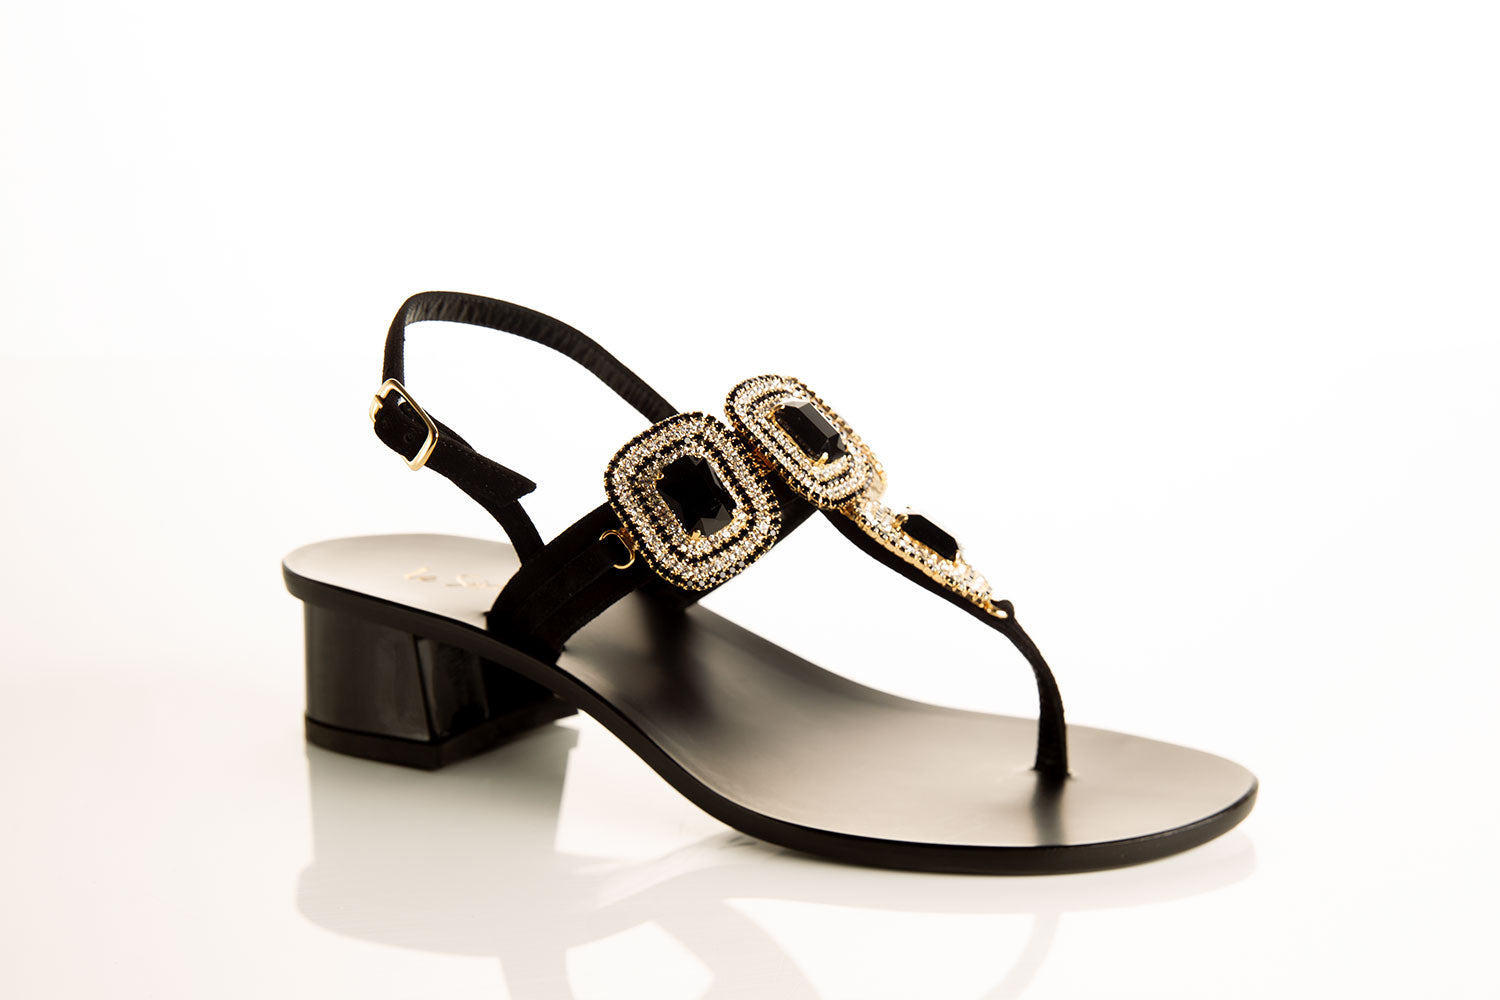 lack jewel sandals, elegant black sandals, Swarovski stone sandals, comfortable heel sandals, Tuscan leather sandals, Capri Sandals